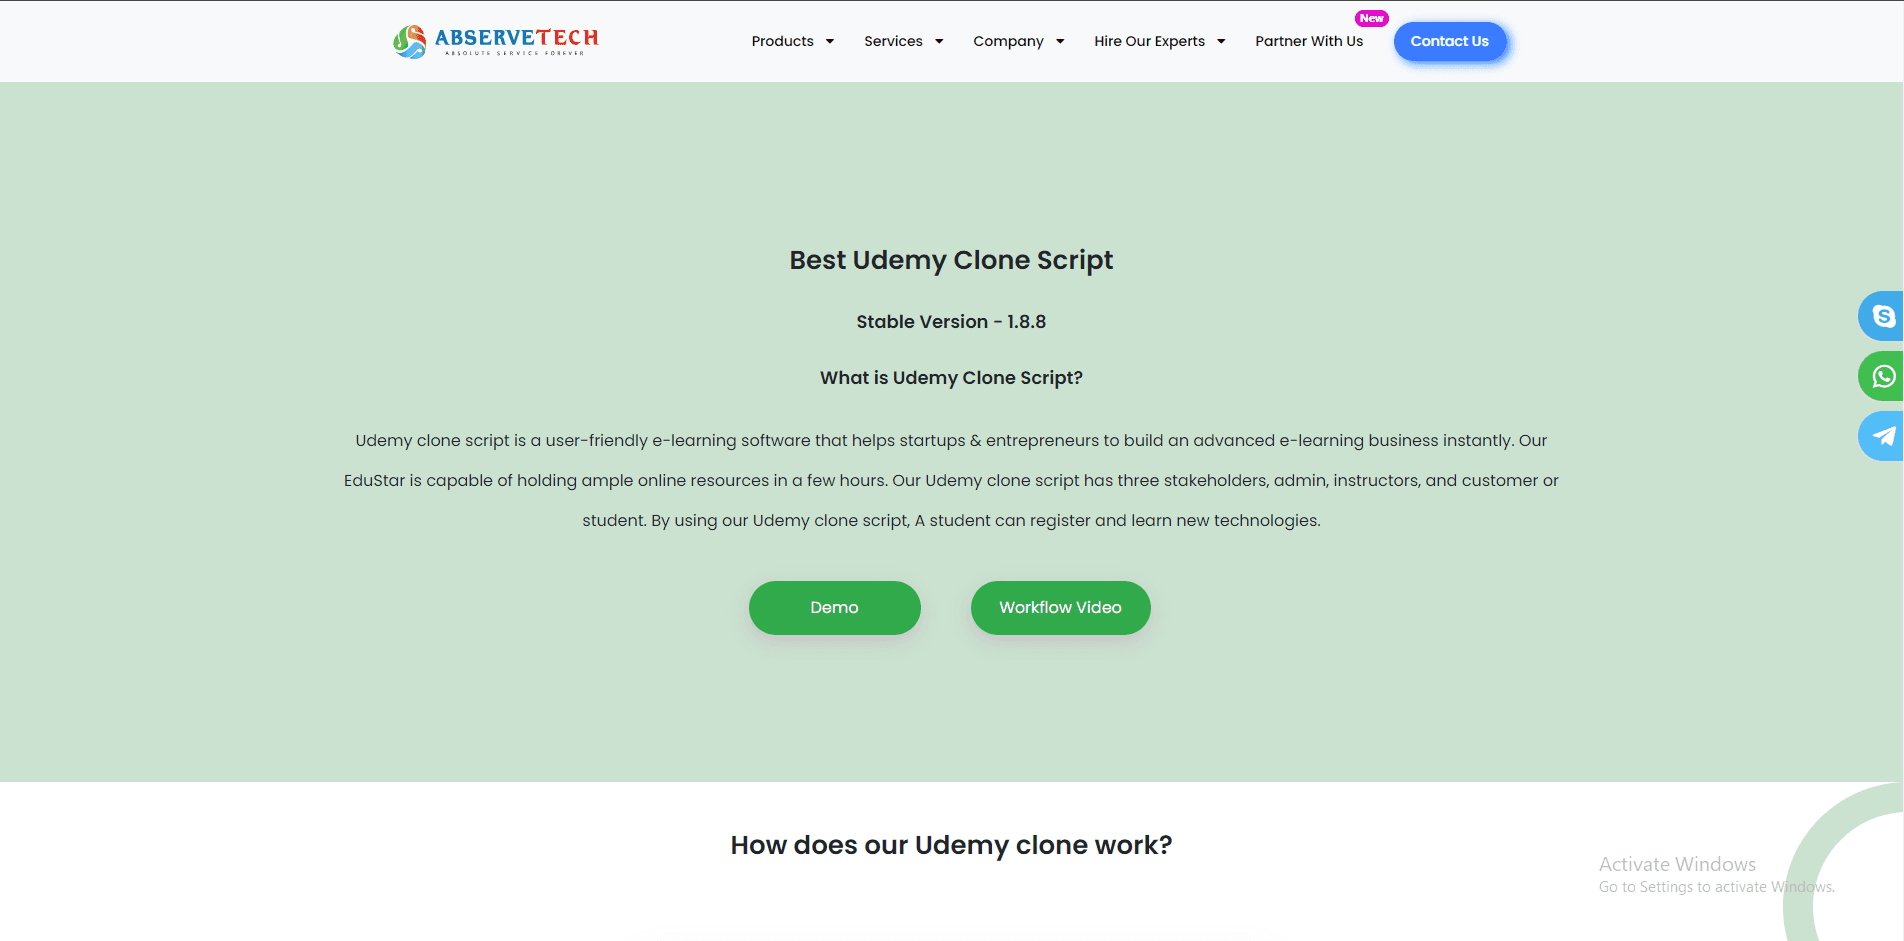 Product: EduStar - Udemy Clone Script